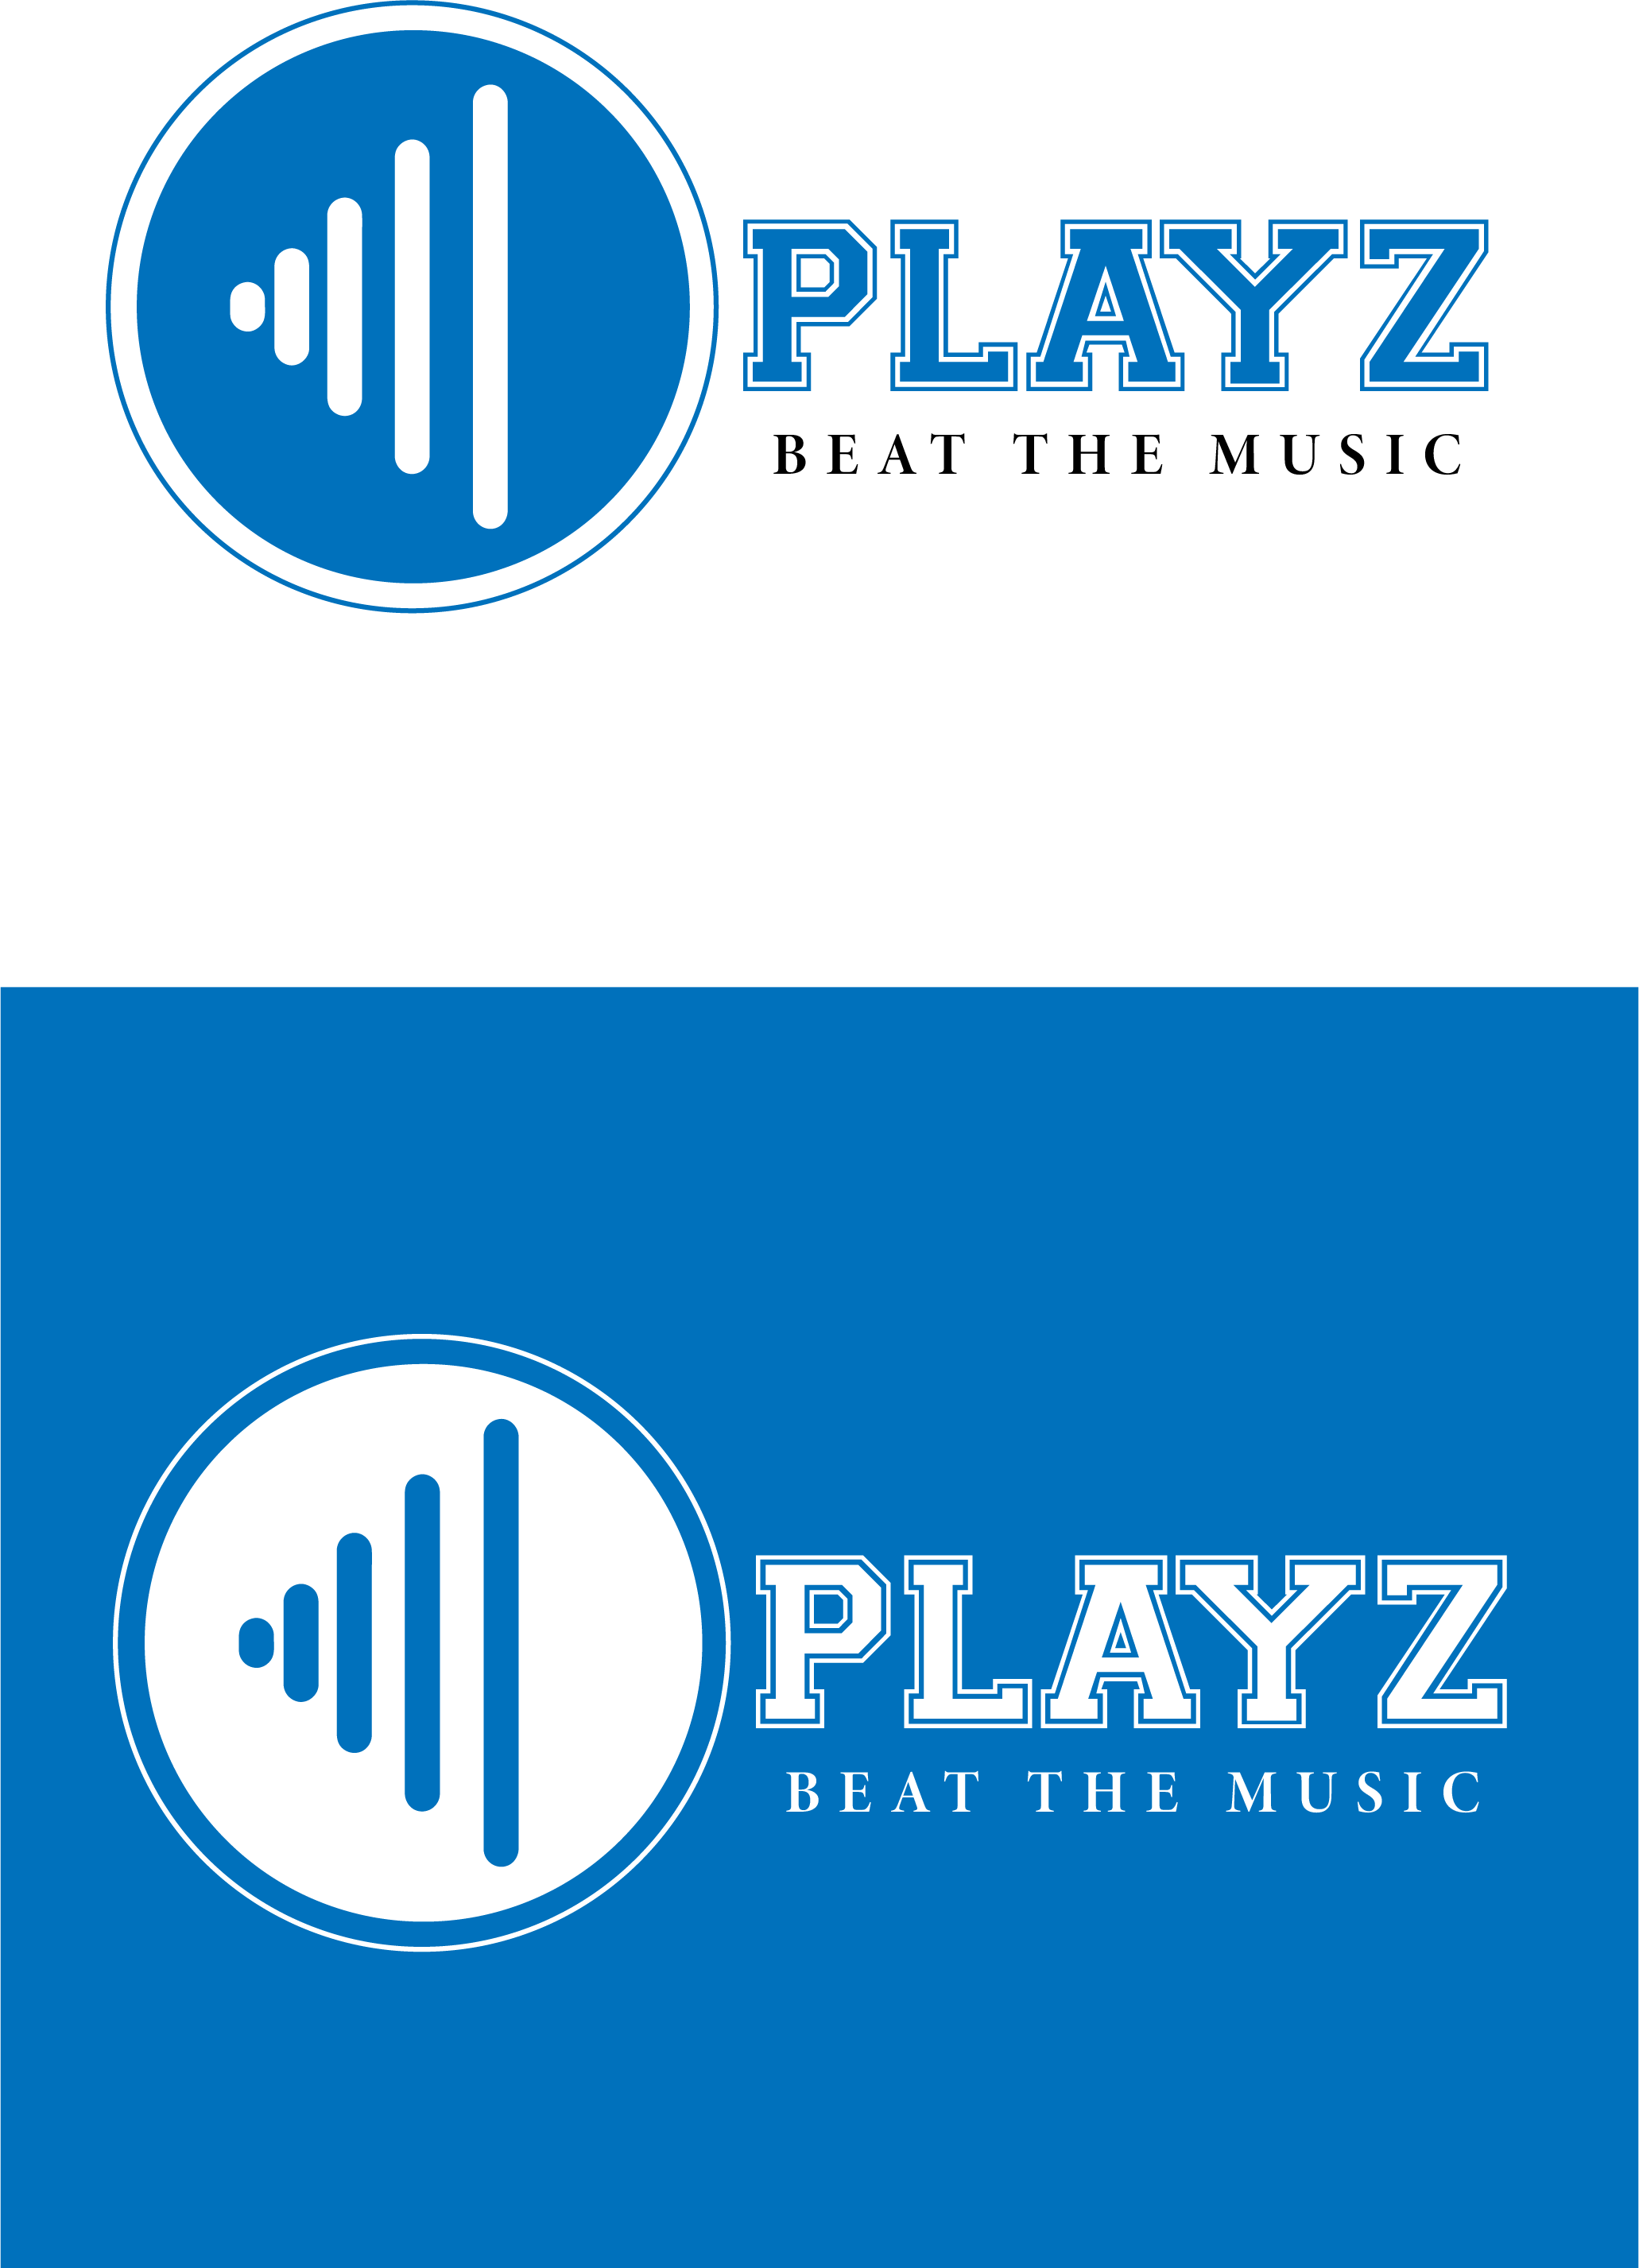 Page 2 - Free printable music logo templates | Canva